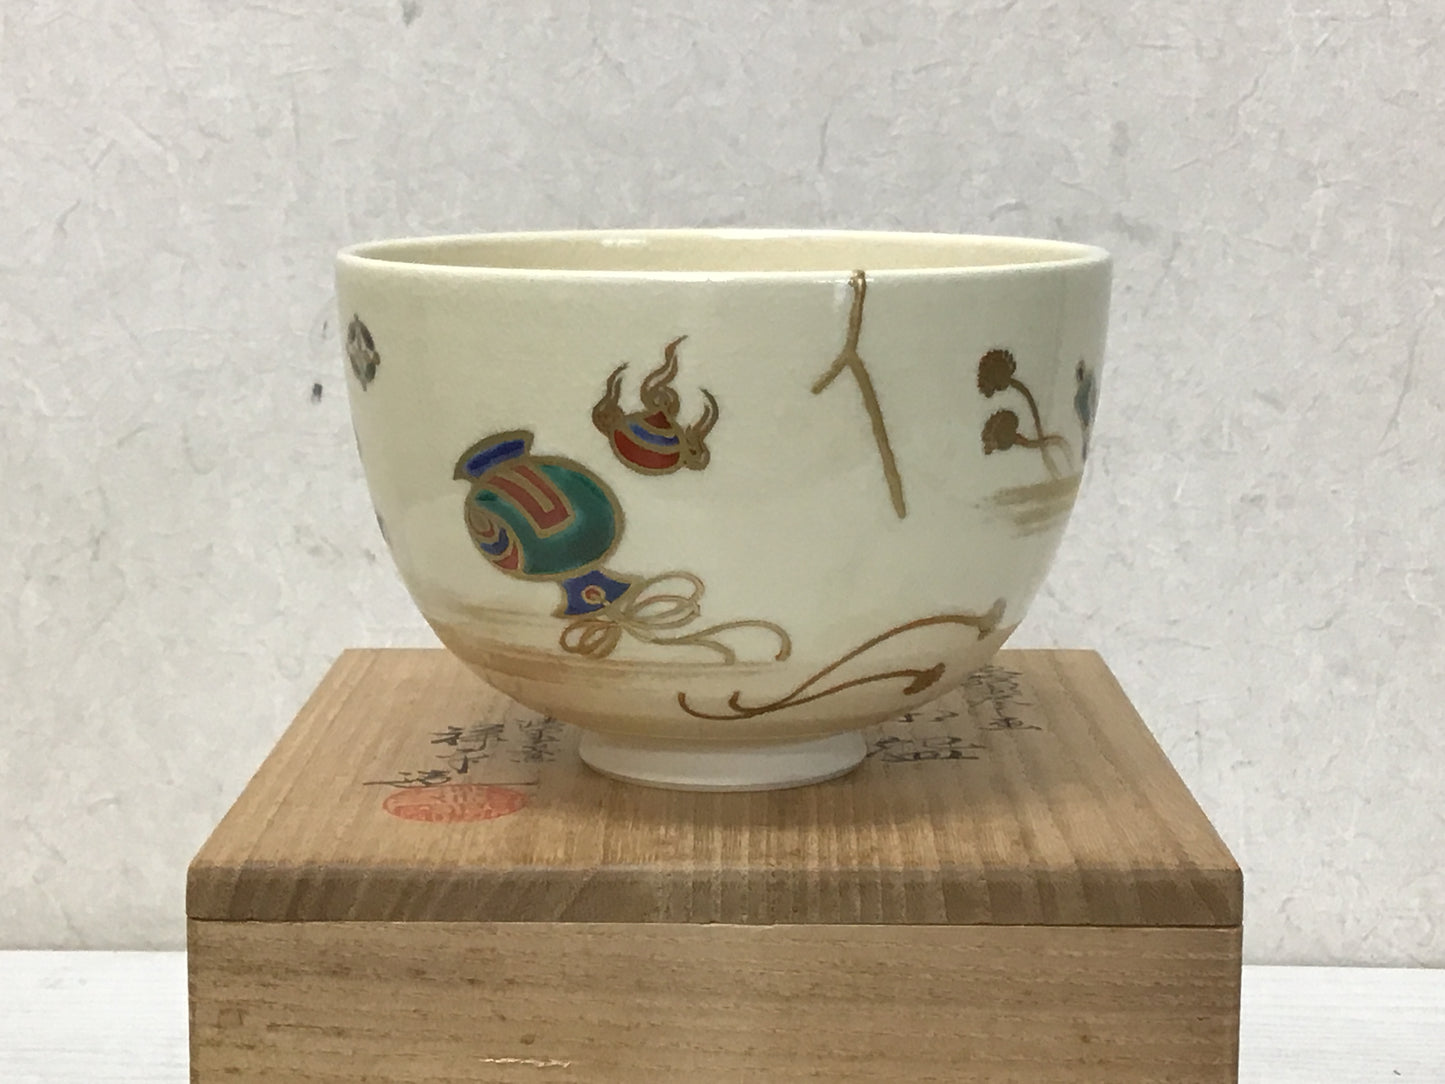 Y1986 CHAWAN Kyo-ware signed box kintsugi Japanese bowl pottery tea ceremony